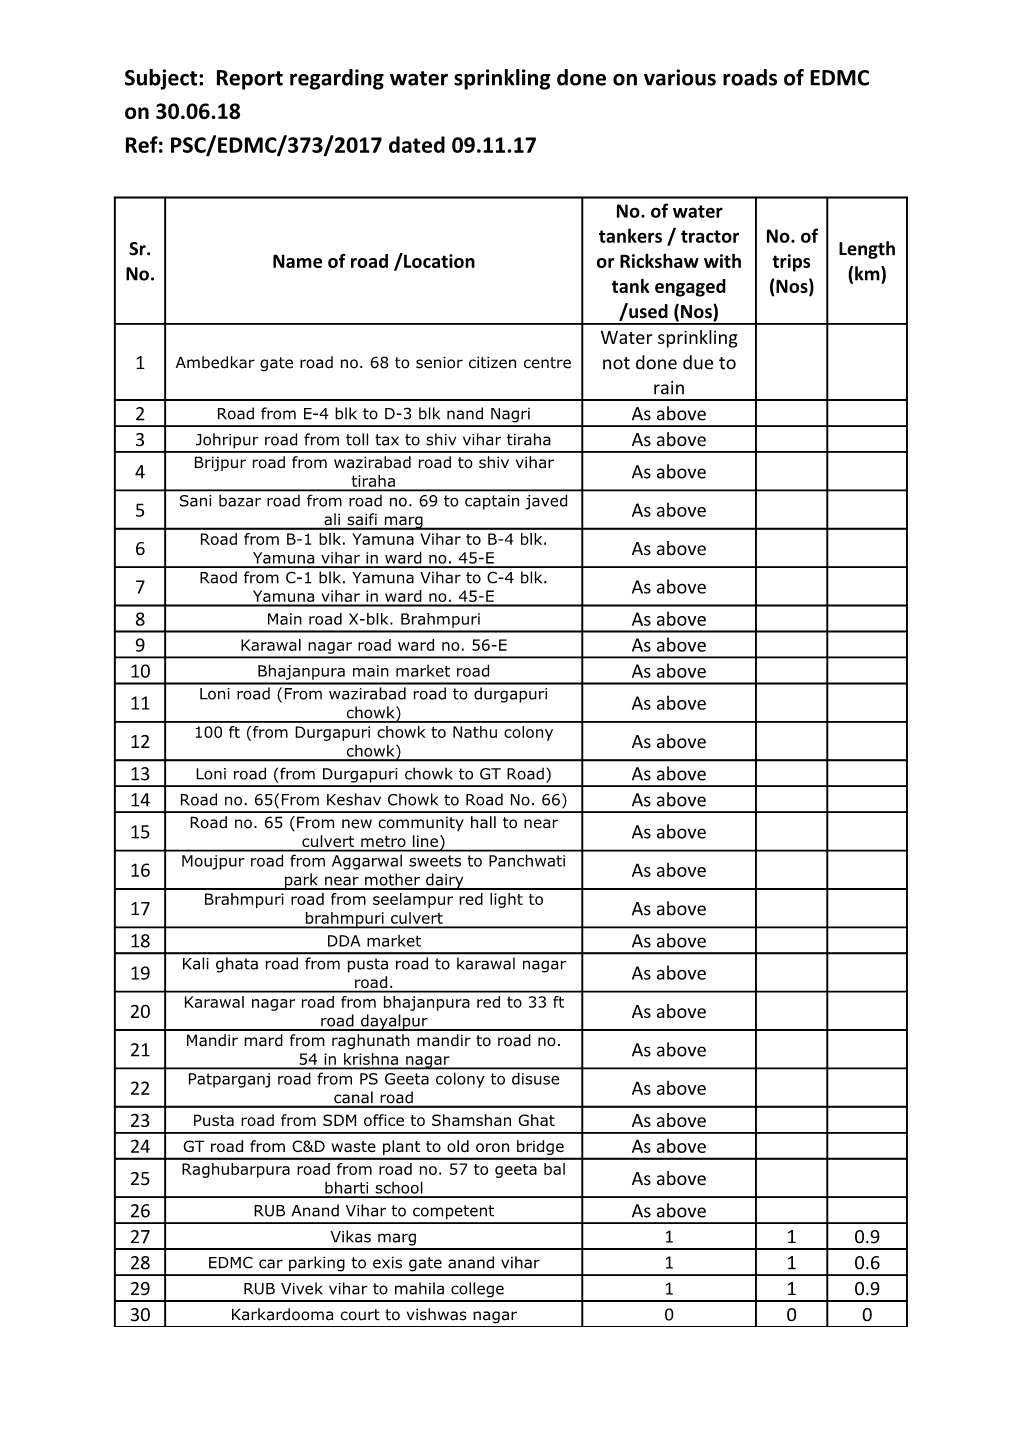 Subject: Report Regarding Water Sprinkling Done on Various Roads of EDMC on 30.06.18